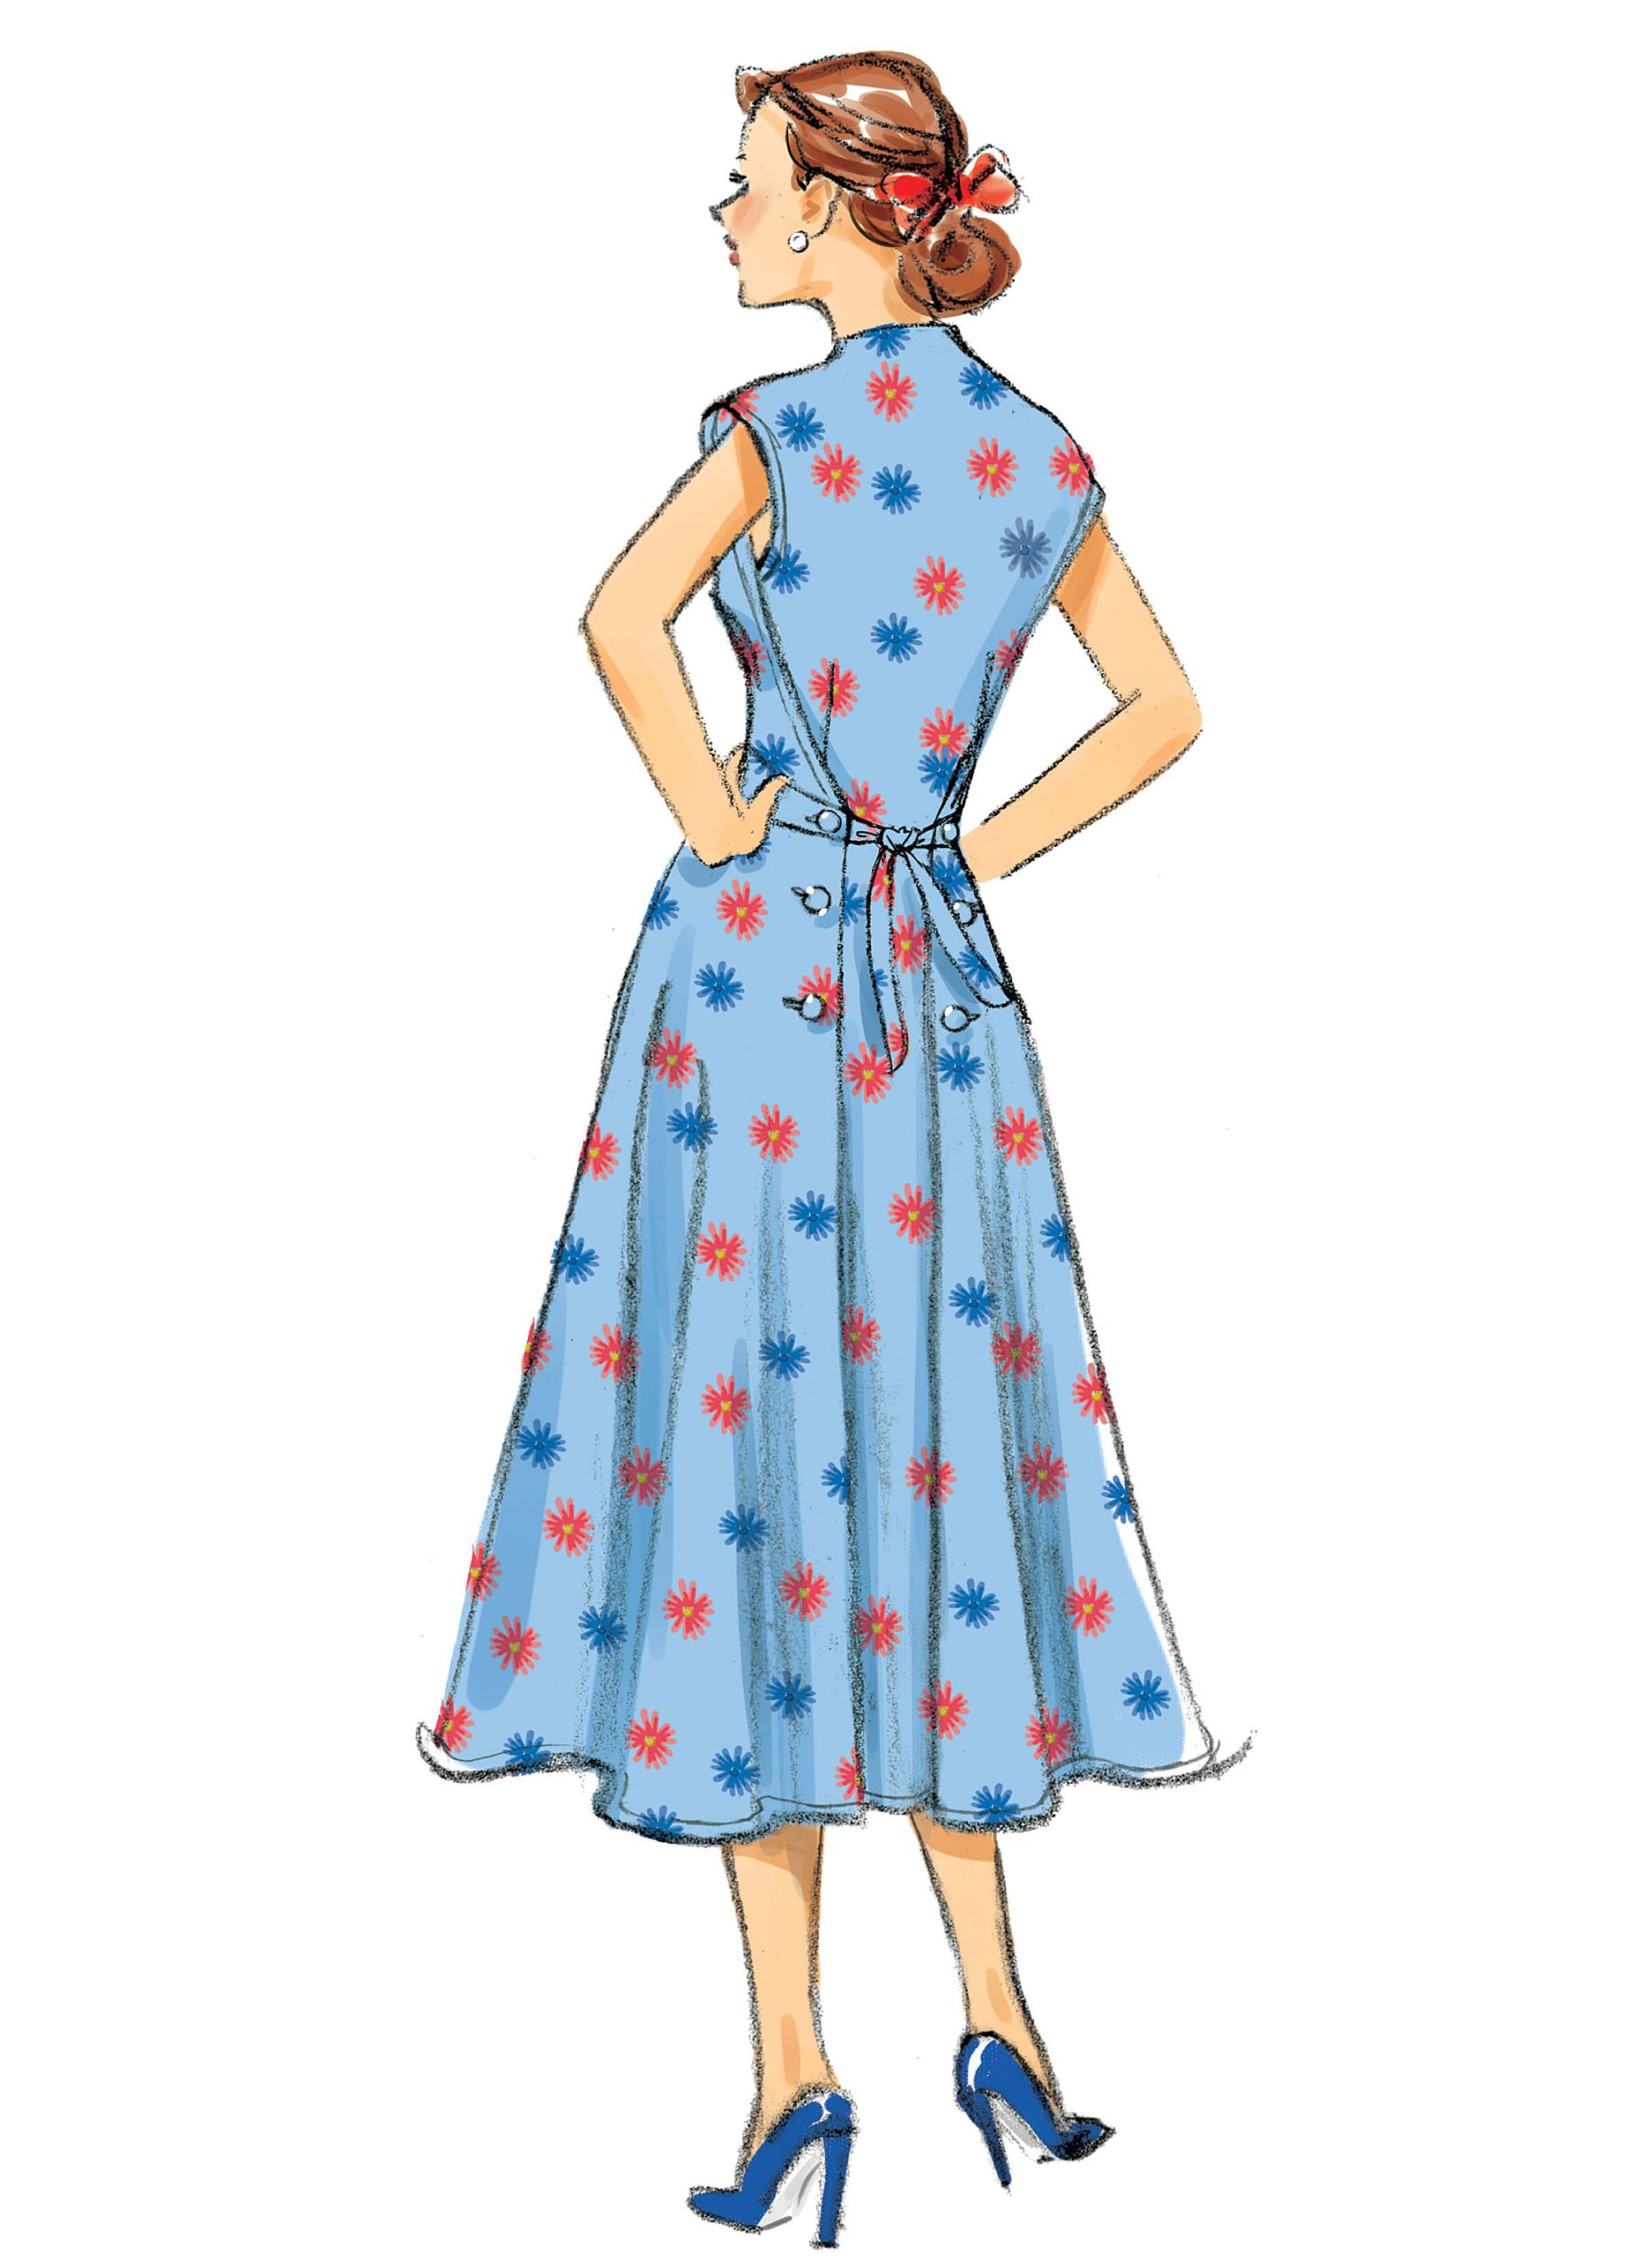 Butterick Sewing Pattern B6212 Misses' Dress